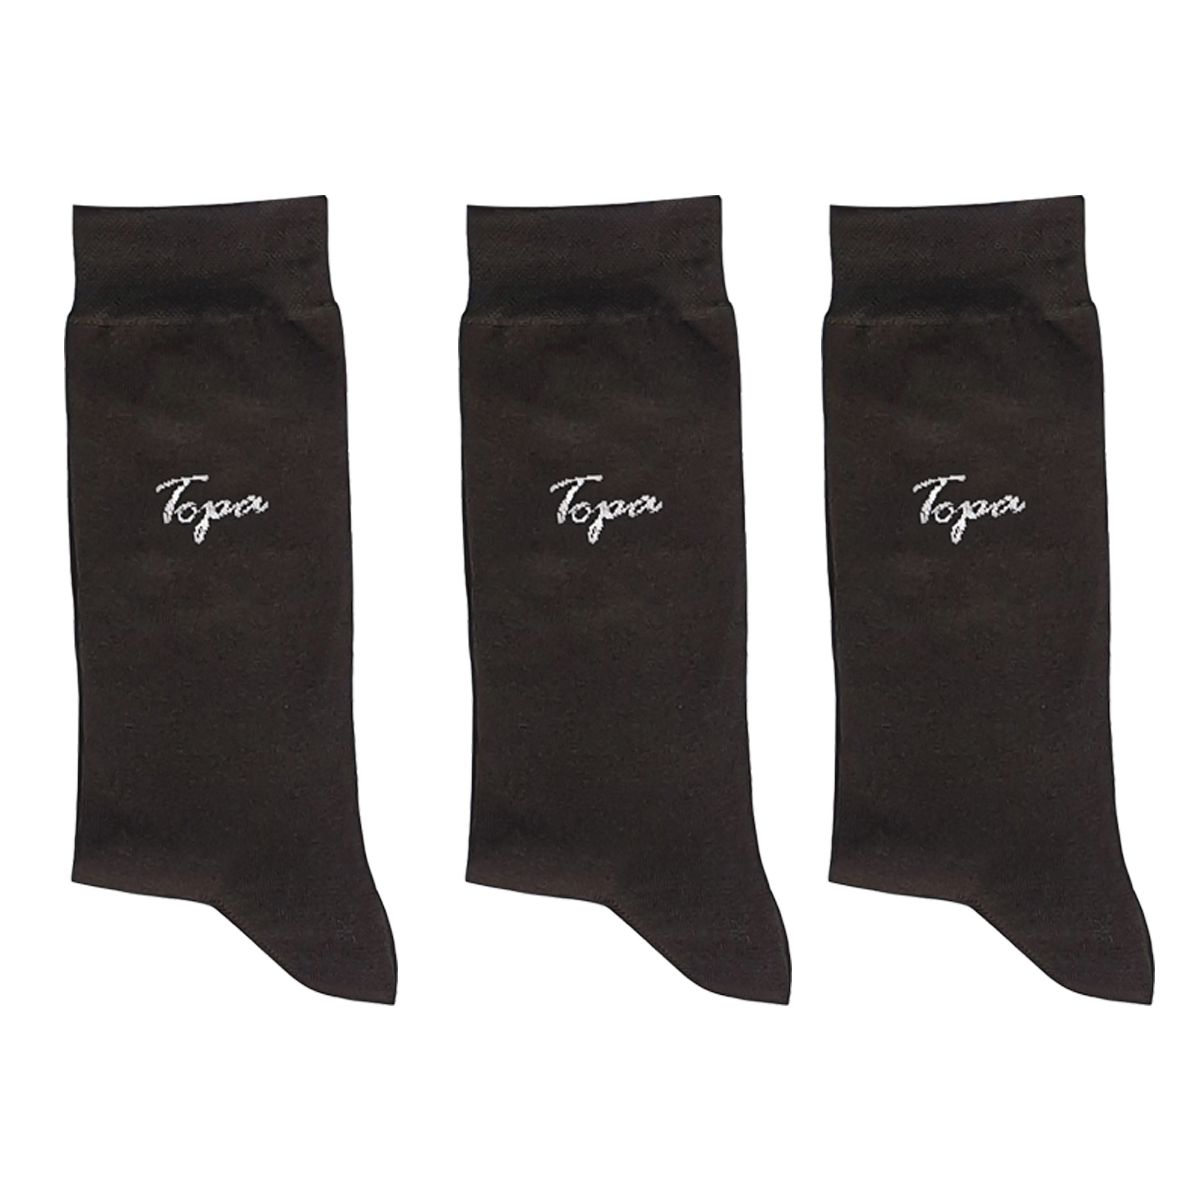 جوراب مردانه توپا مدل سپنتا بسته 3 عددی -  - 1